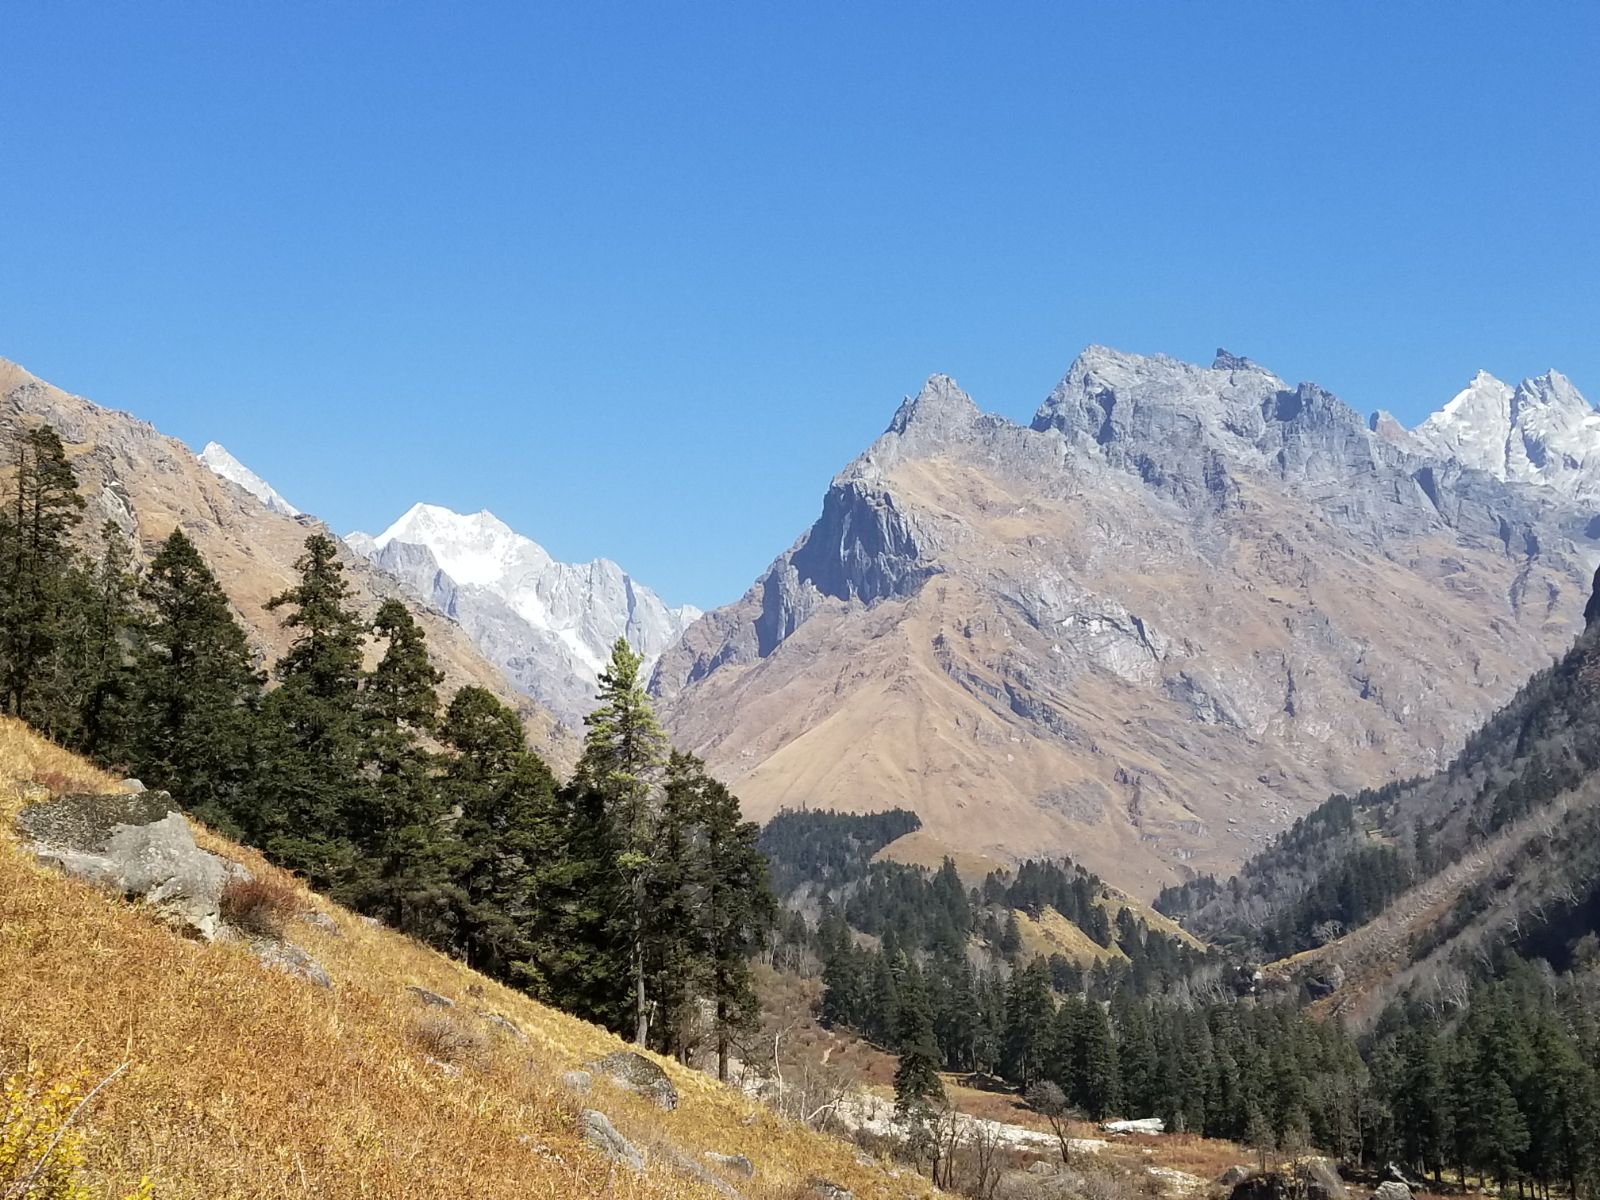 The peaks await - Himalayan Institute